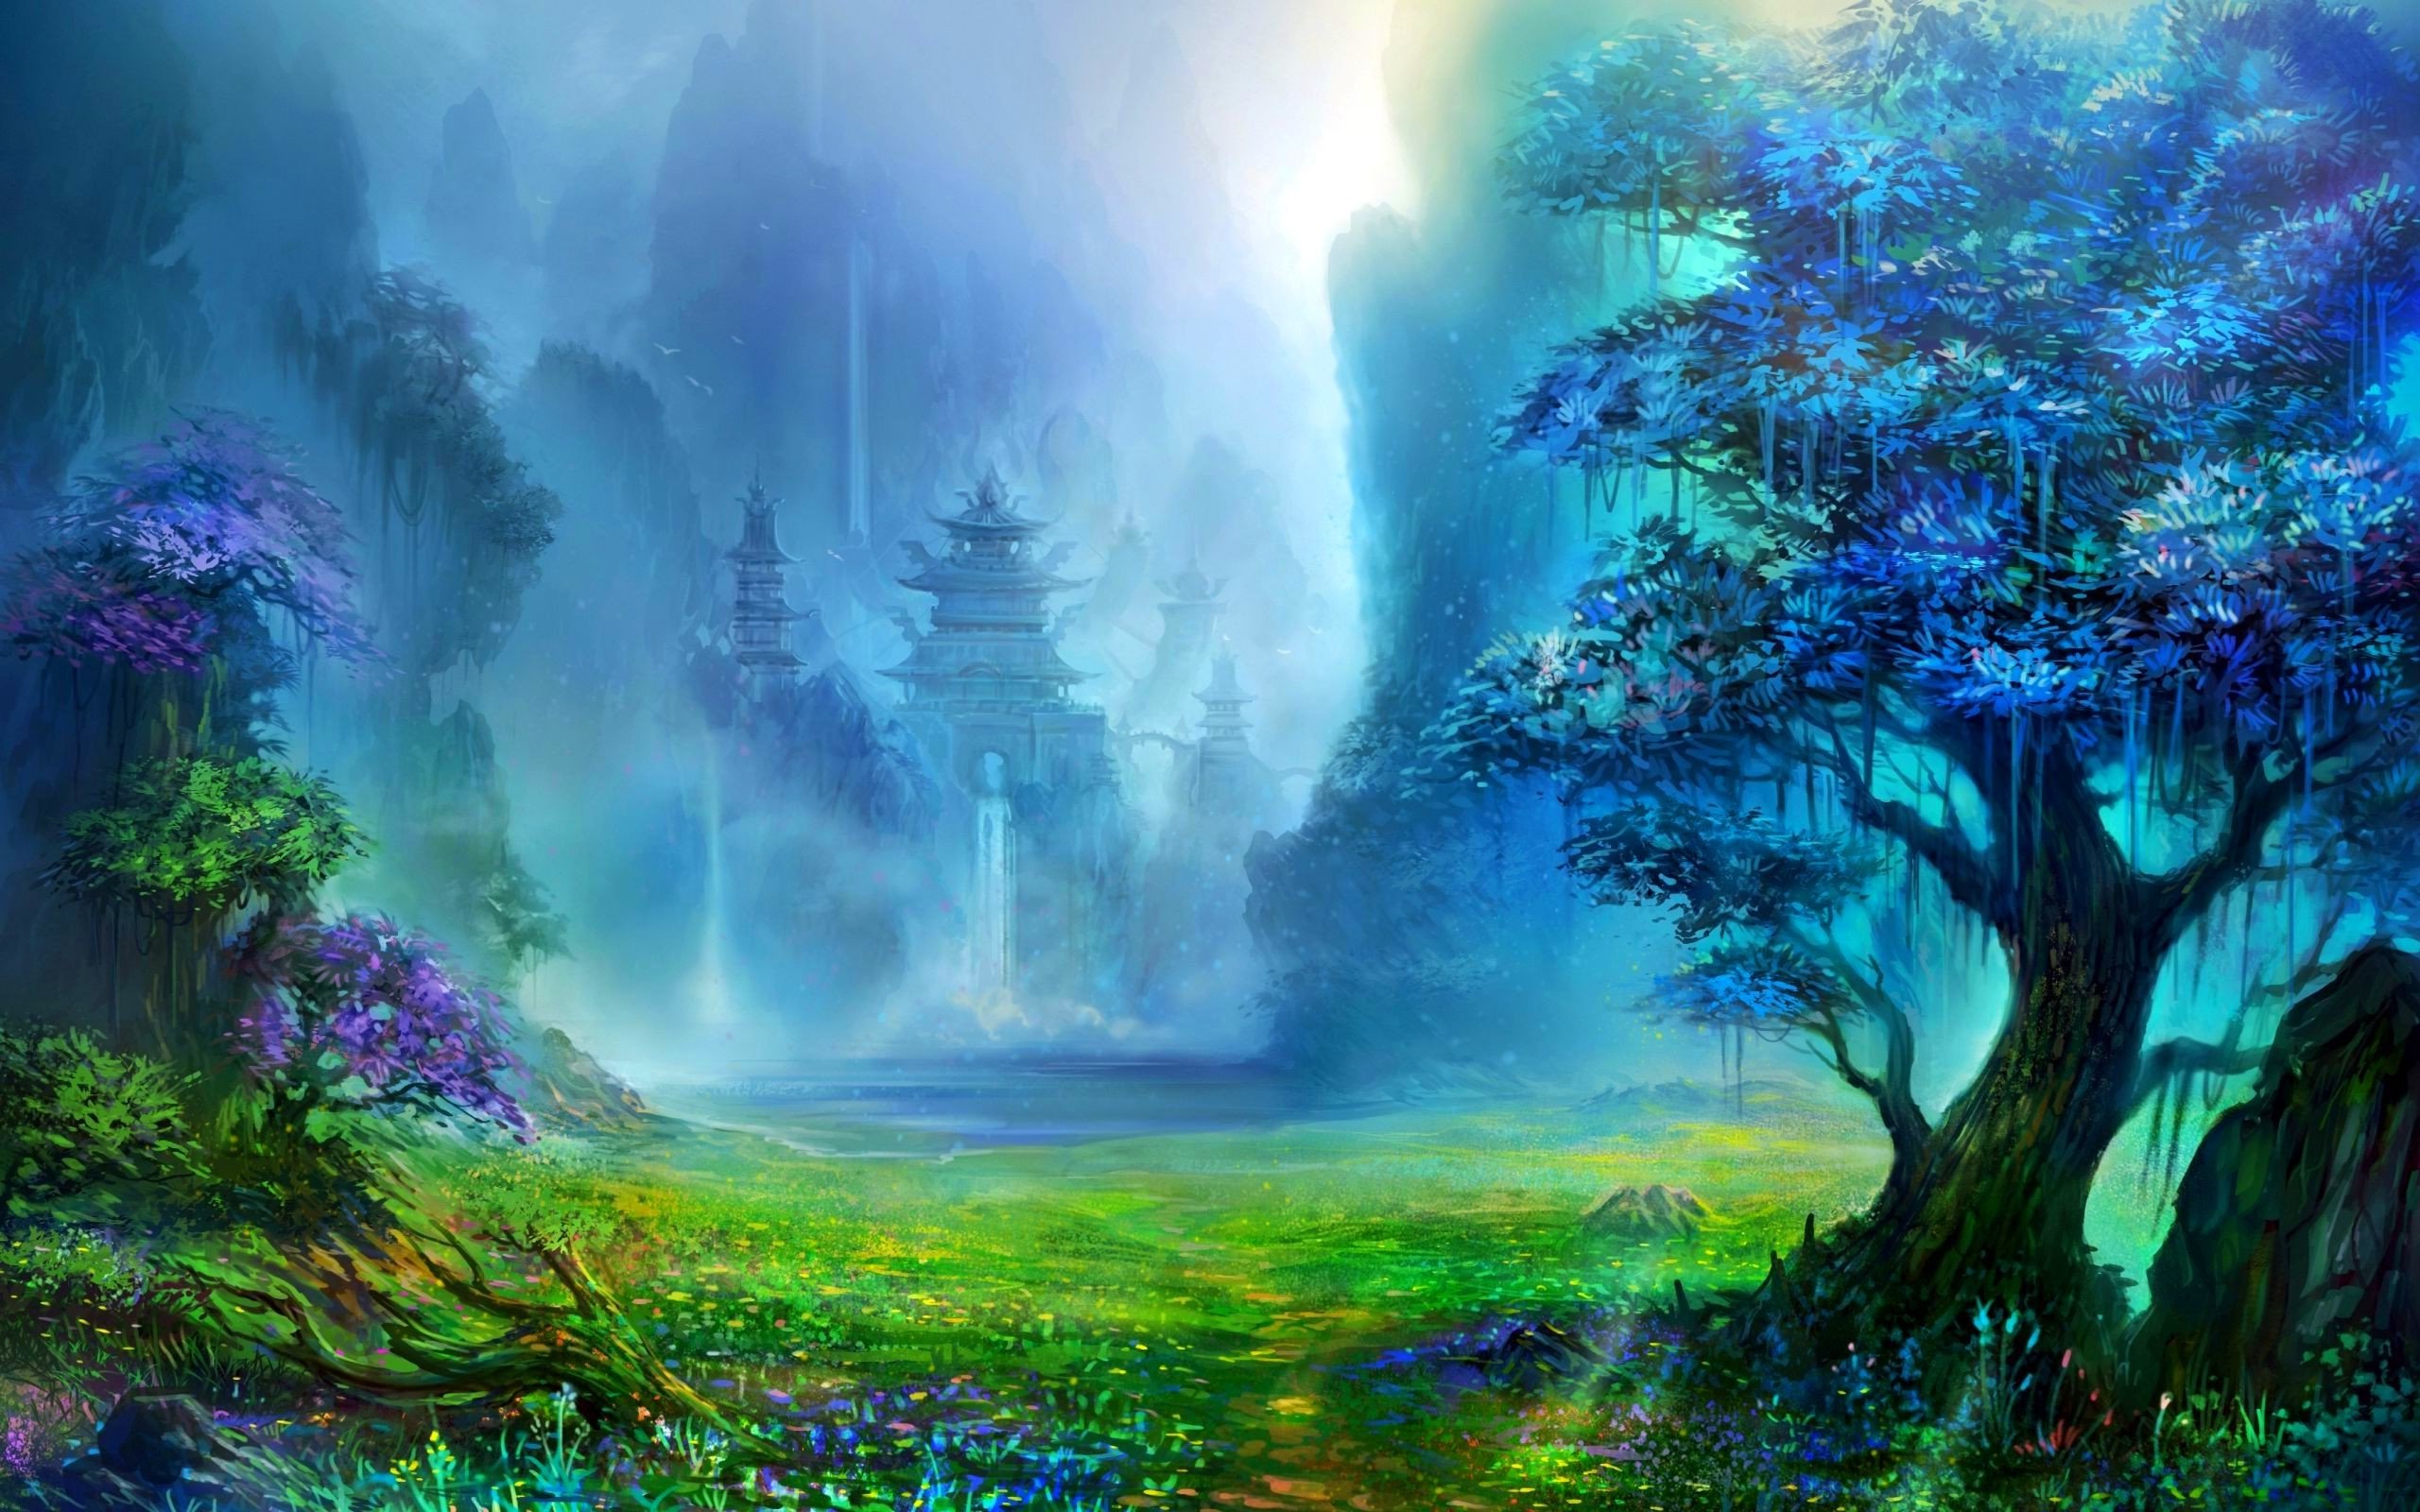 fantasy Art, Pagoda, Asian Architecture, Trees, Waterfall, Artwork, Mountain, Digital Art, Nature, Landscape, Water Wallpaper HD / Desktop and Mobile Background